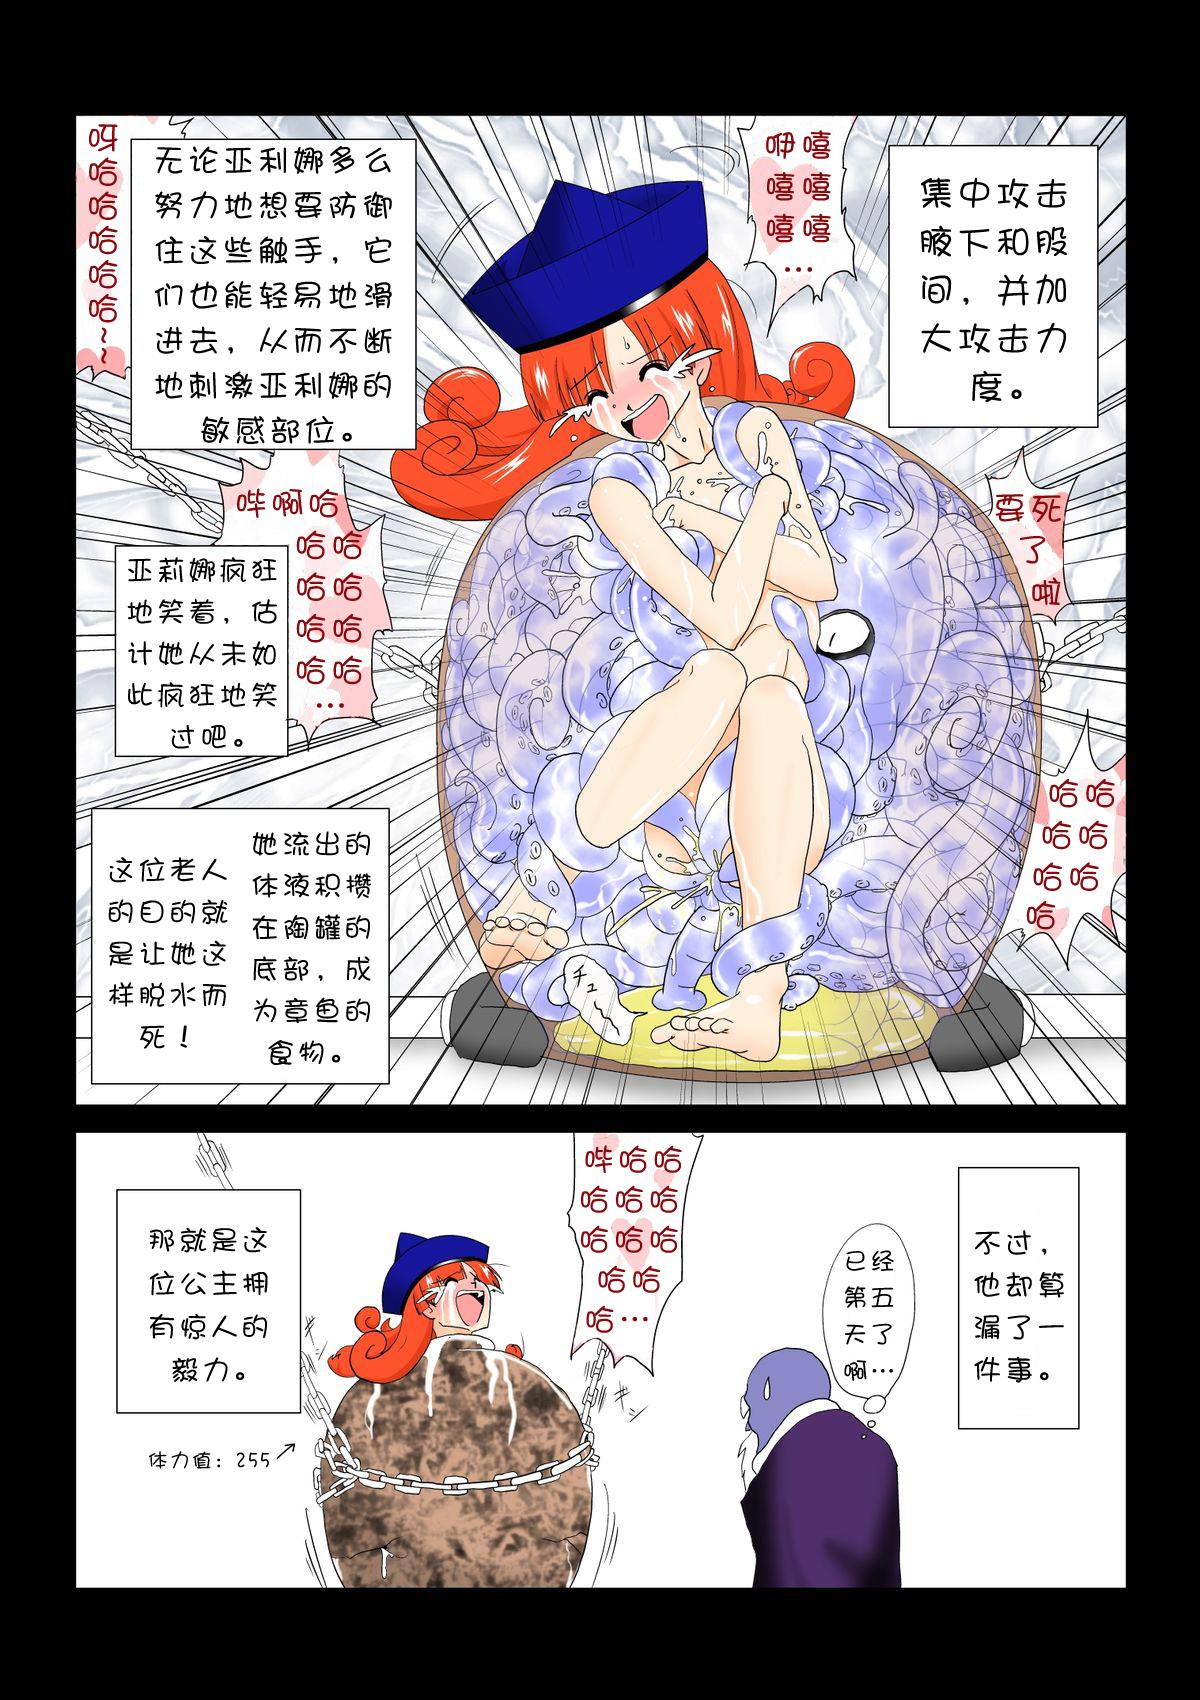 Load Tako Tsubo - Dragon quest iv Dragon quest v Spy - Page 9